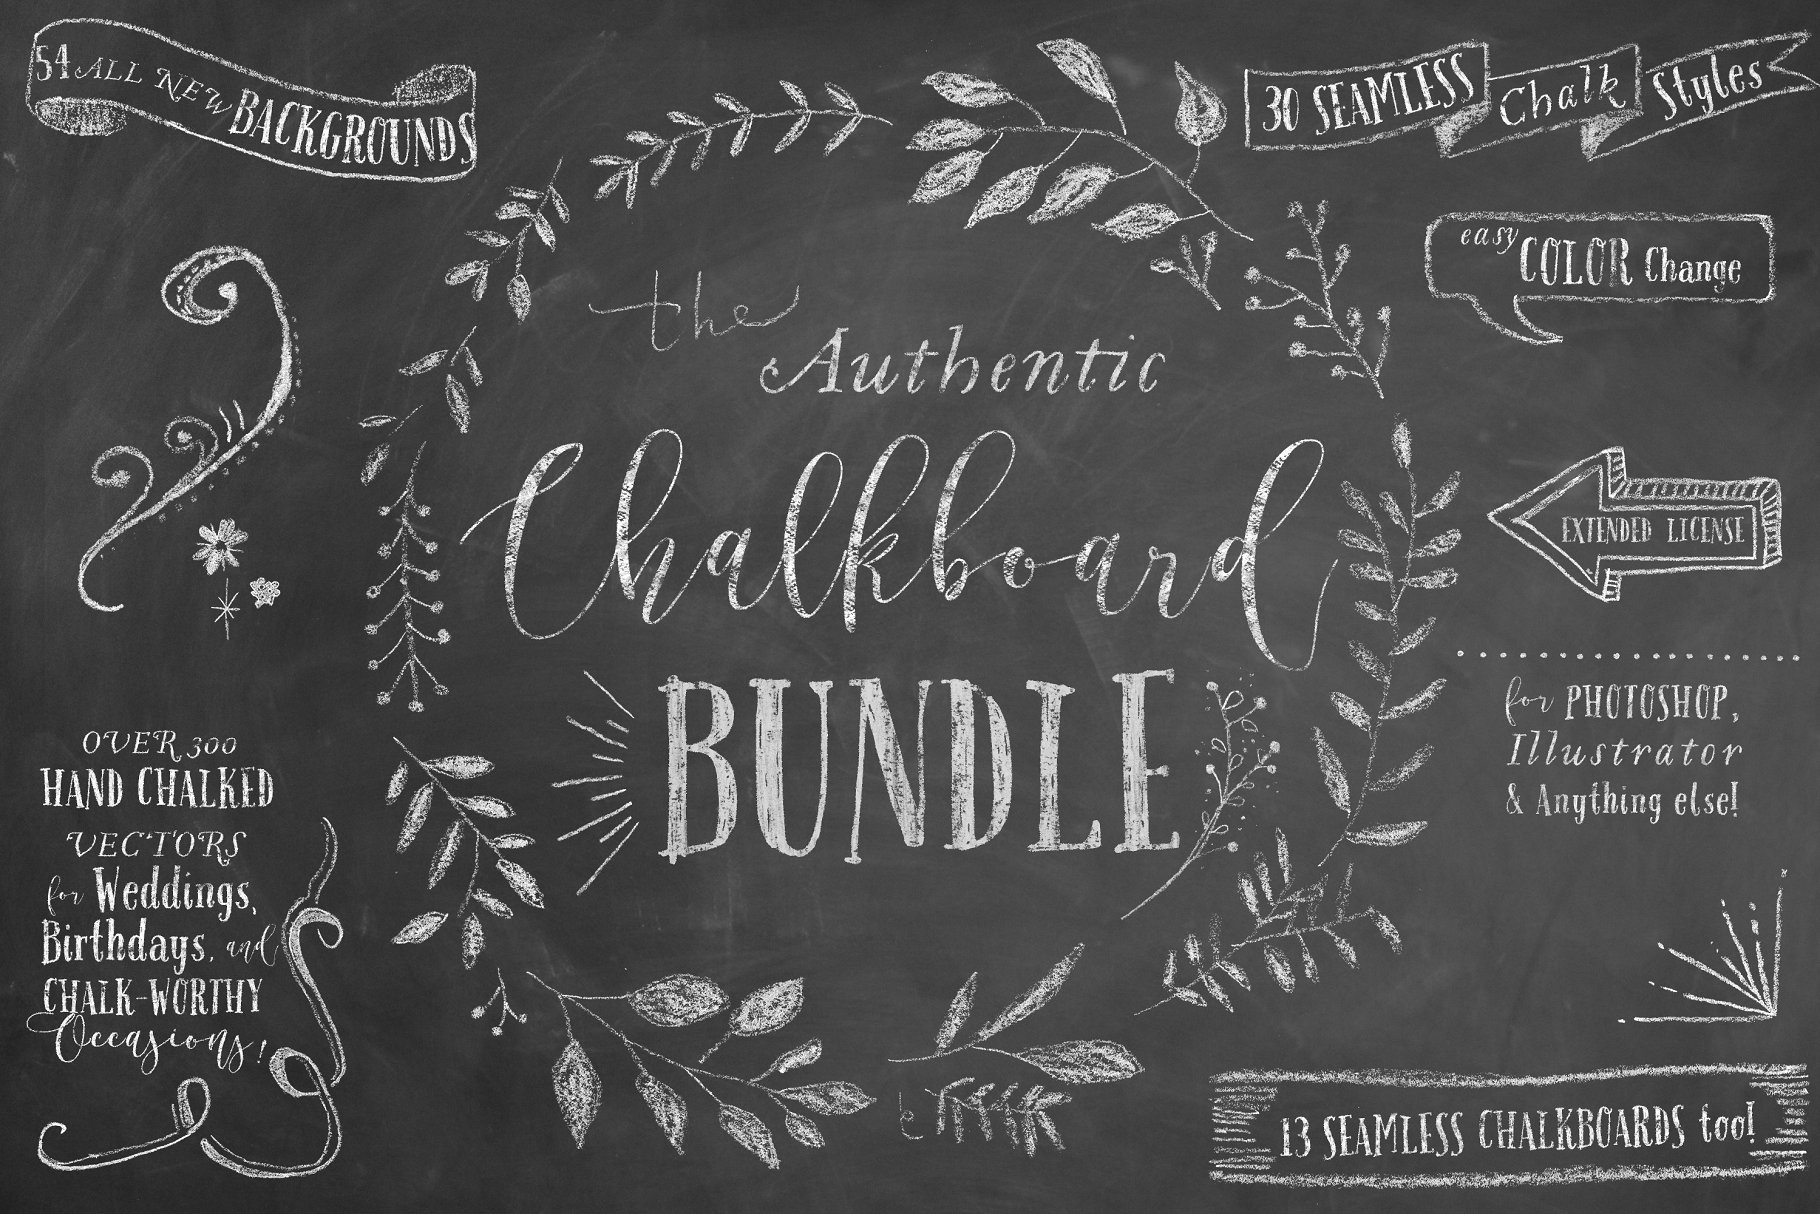 黑板粉笔画手绘设计素材包[1.47GB] The Authentic Chalkboard Bundle插图